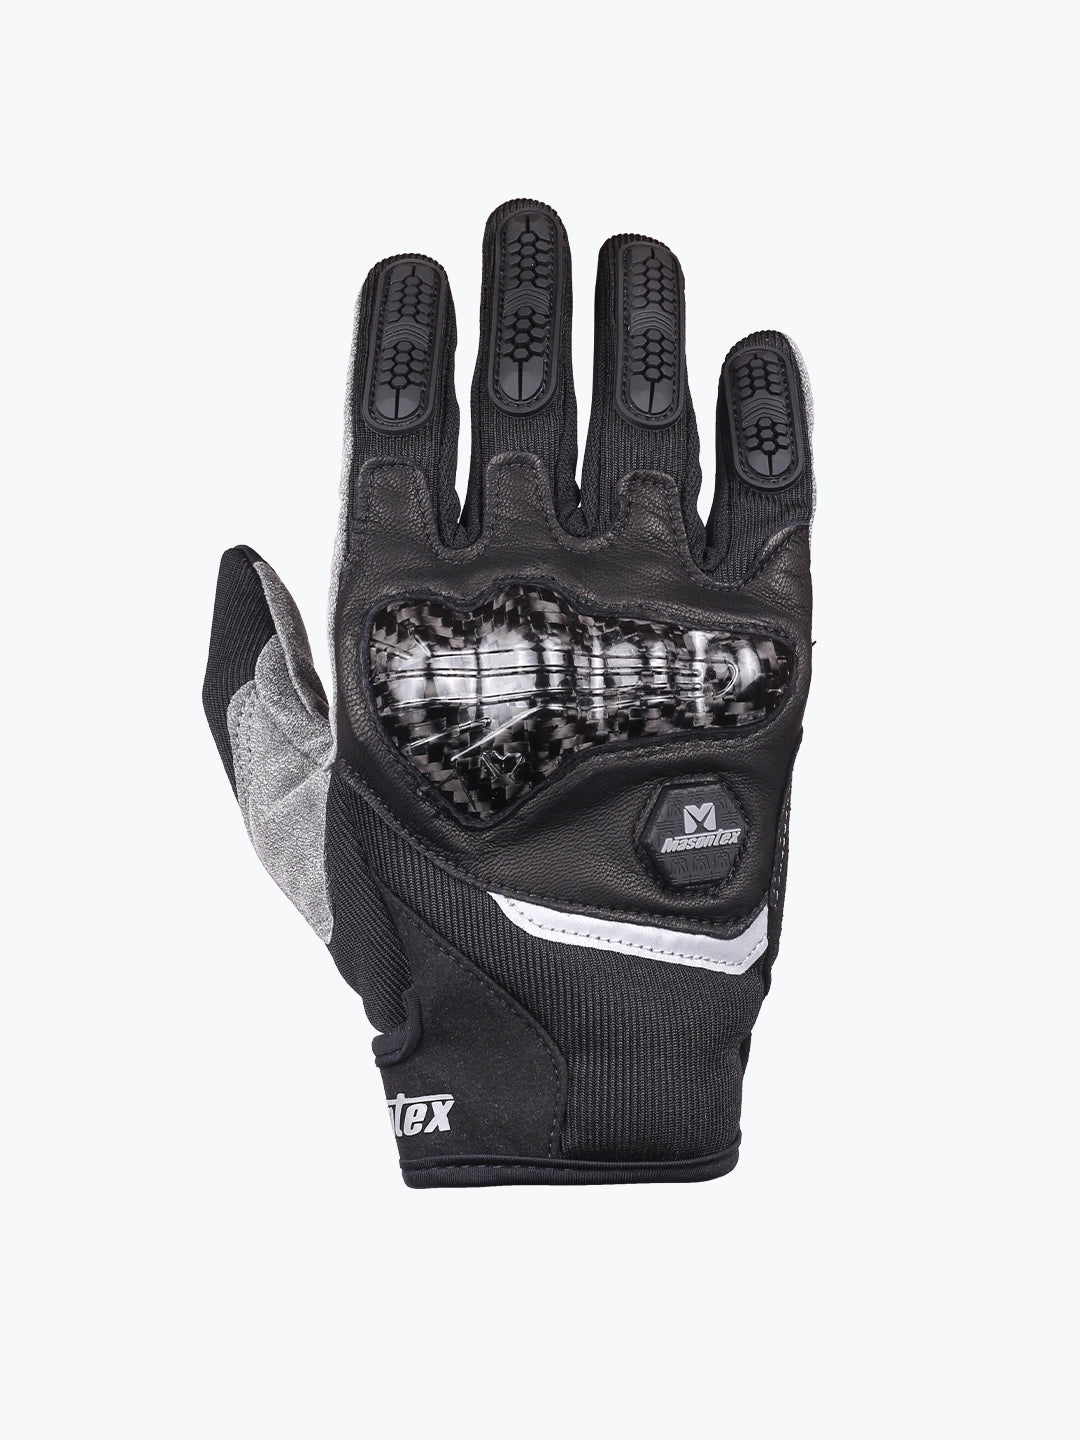 Masontex Full Gloves Black M30IV Carbon